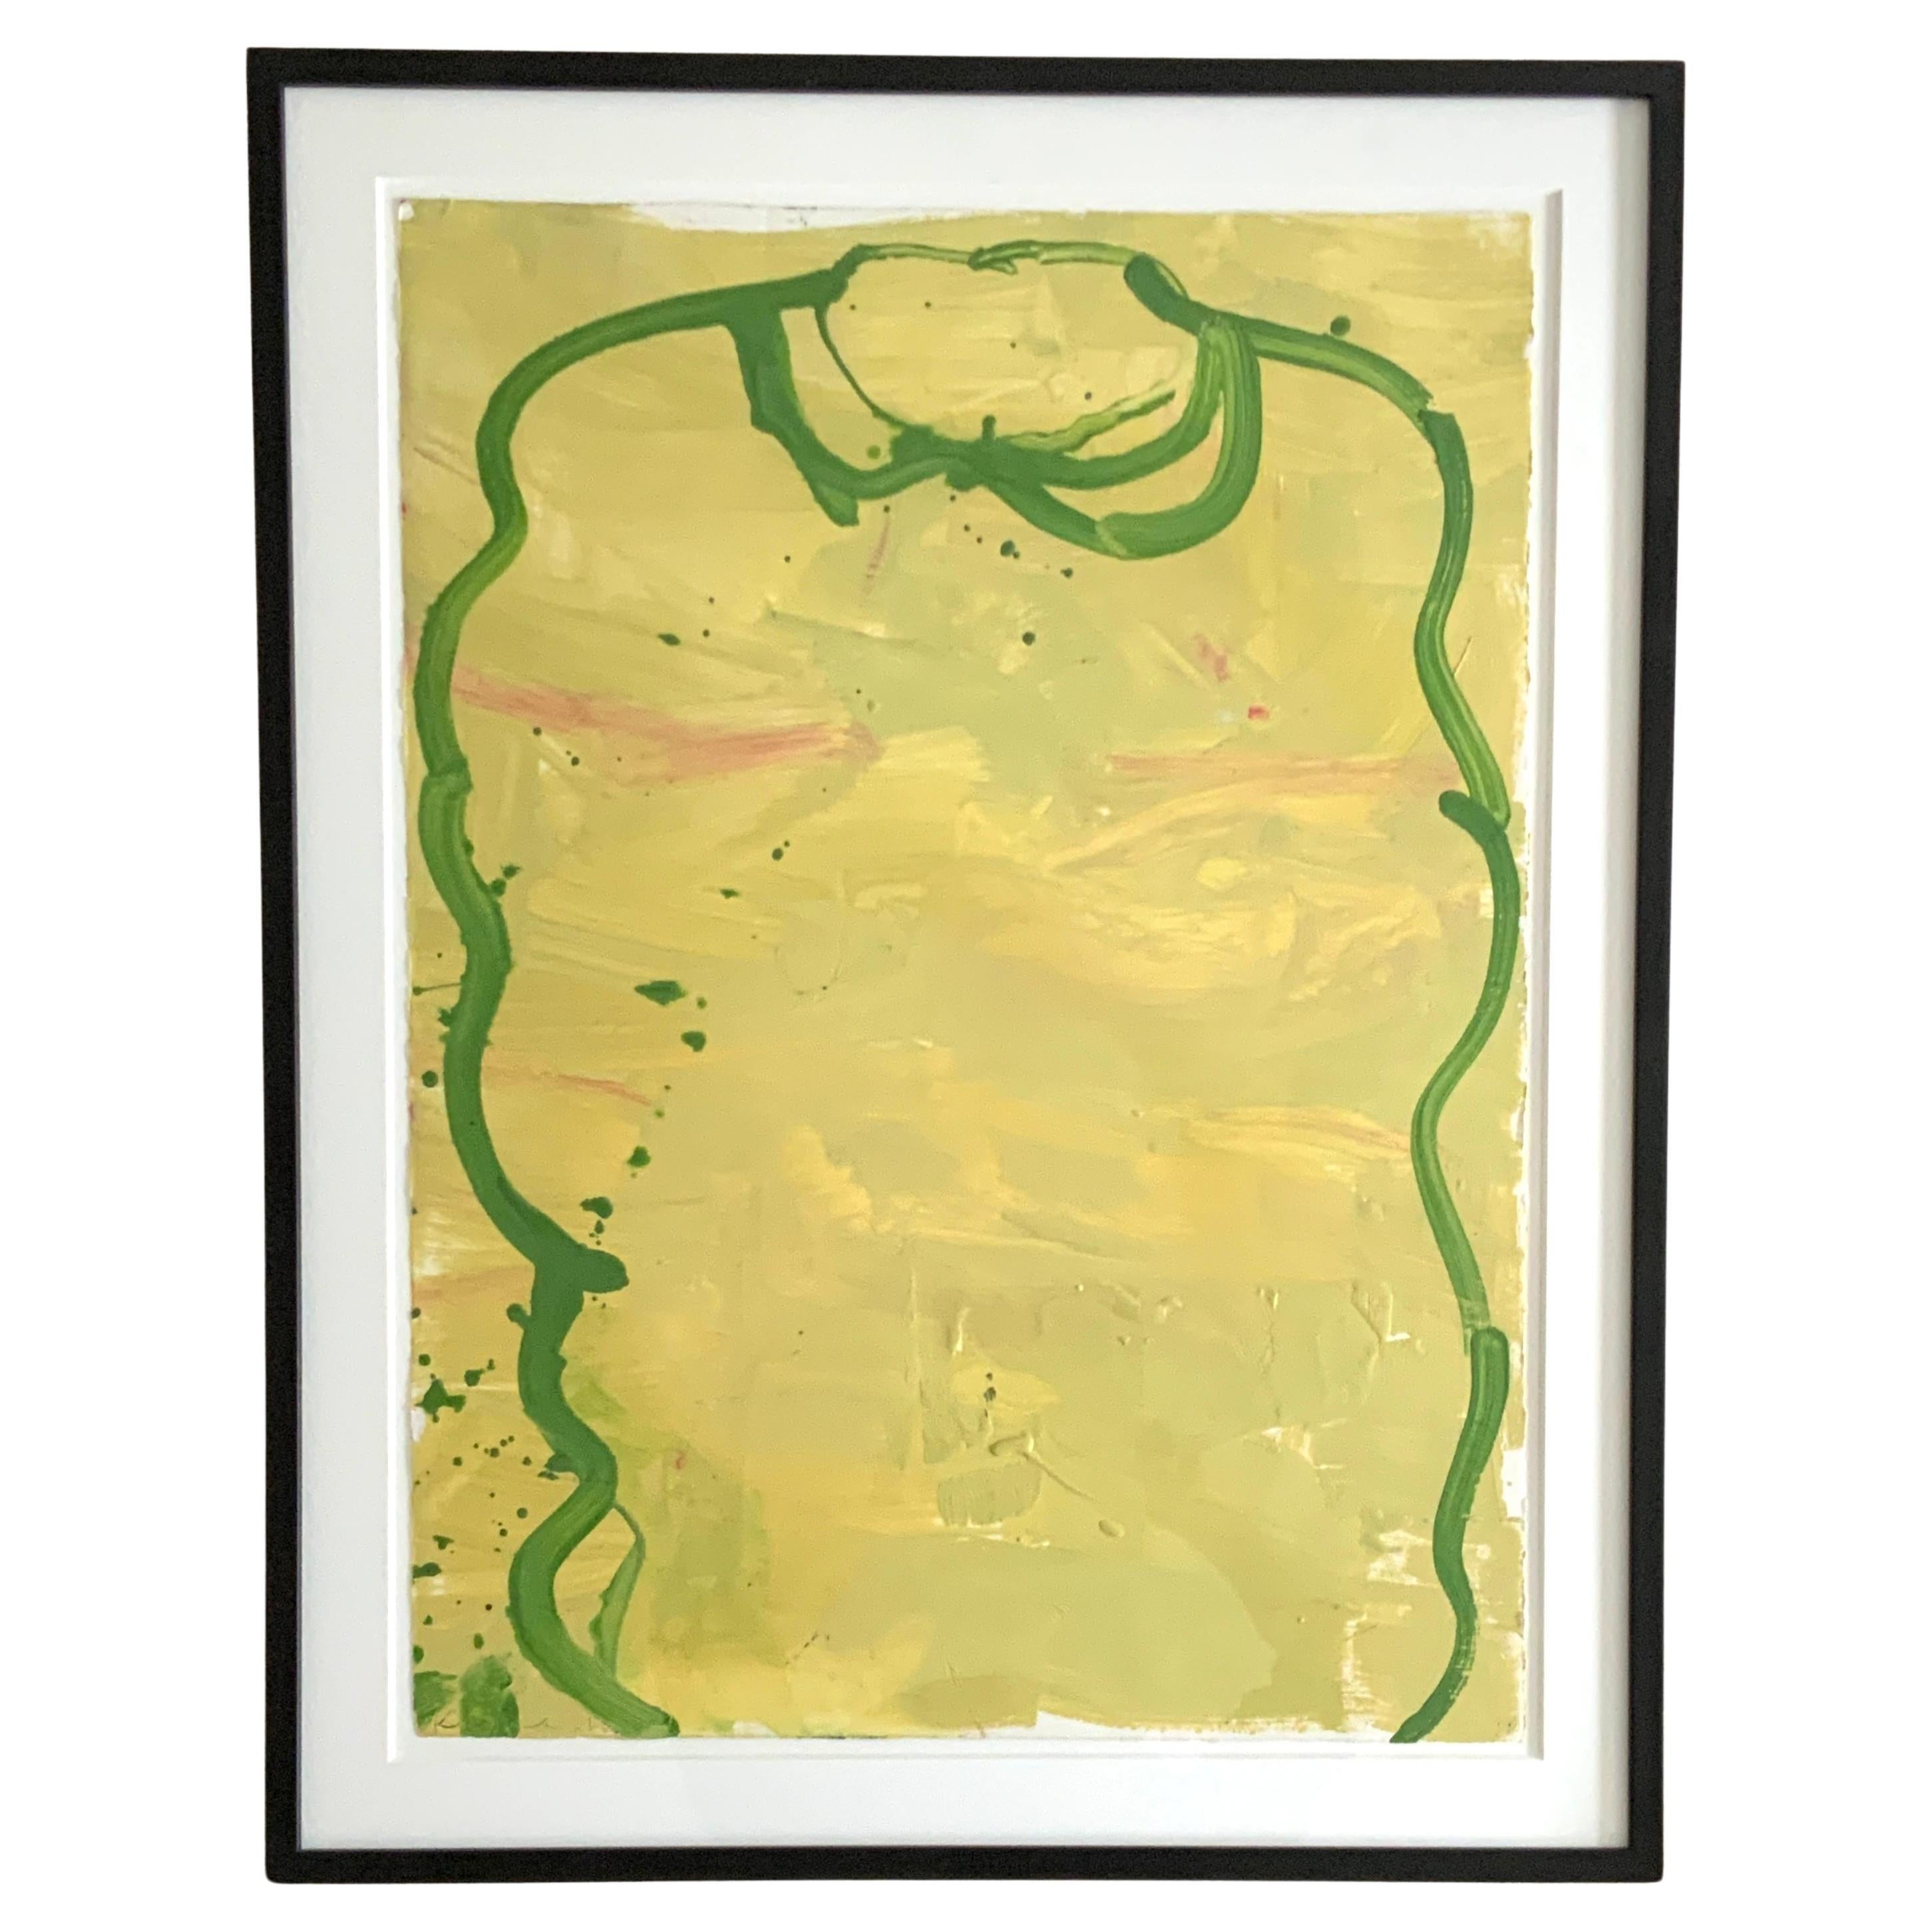 Gary Komarin Untitled Green Vessel on Yellow Green, acrylique sur papier, 2000